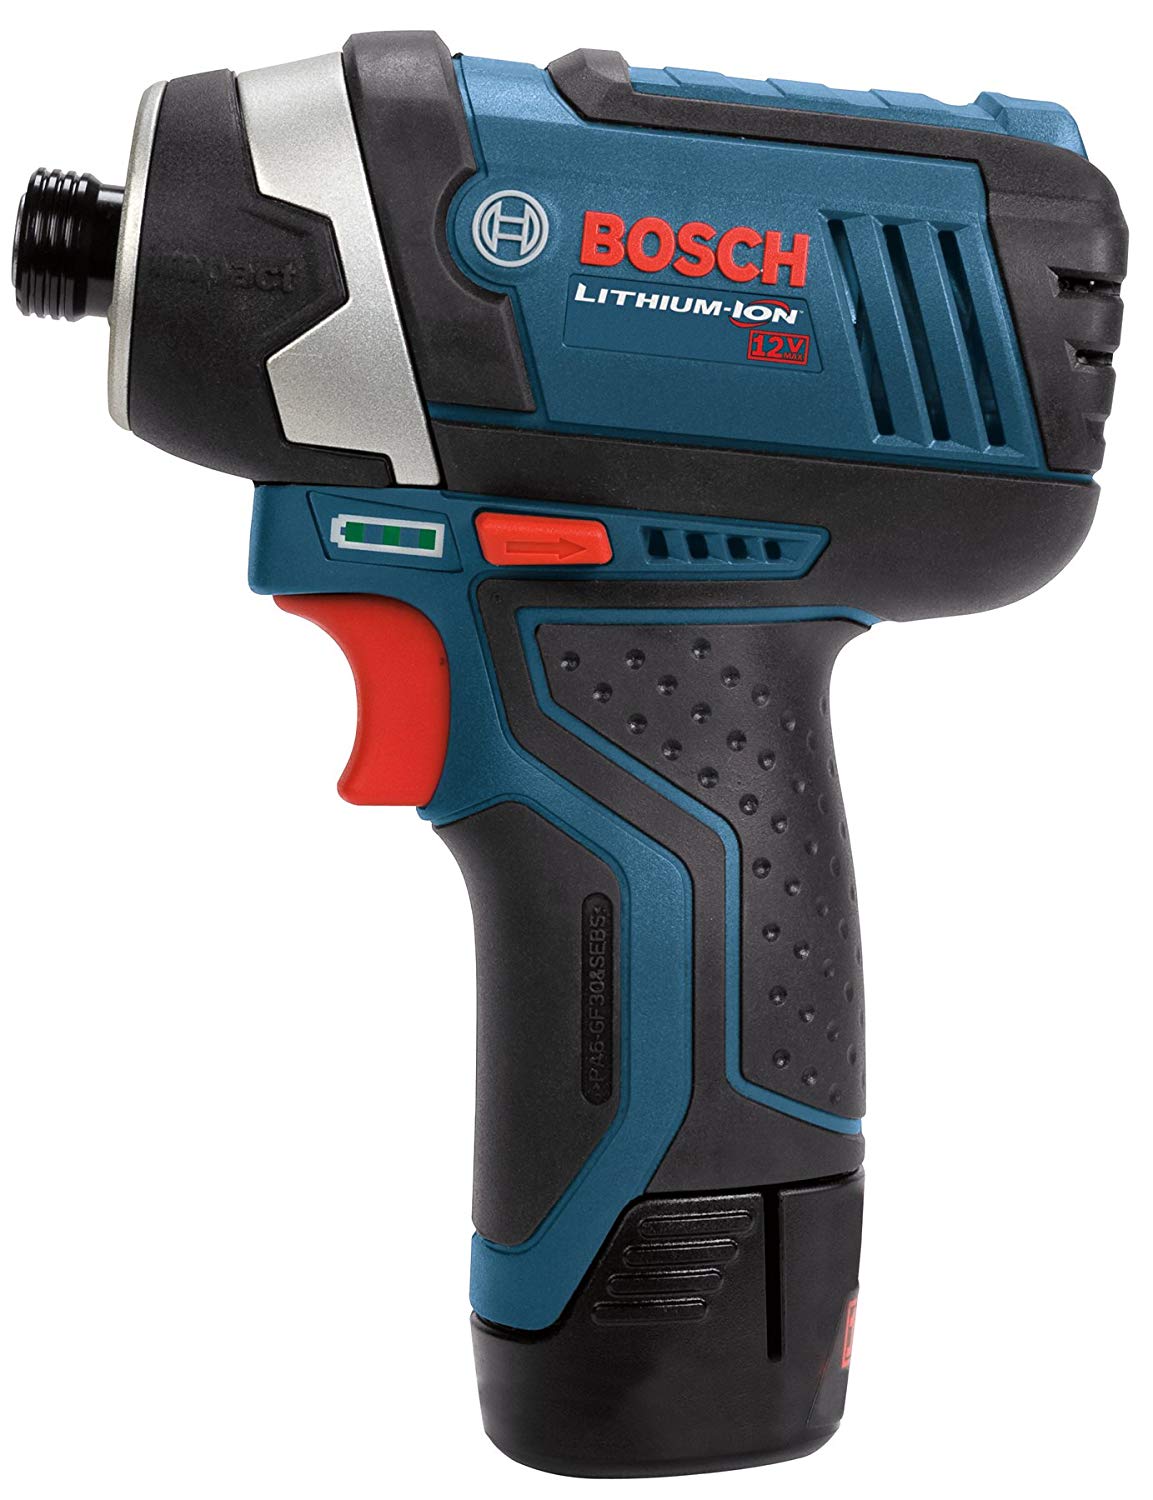 Bosch CLPK22-120 Lithium-Ion 12V Drill/Driver & Impact Driver Combo 2-Tool Kit